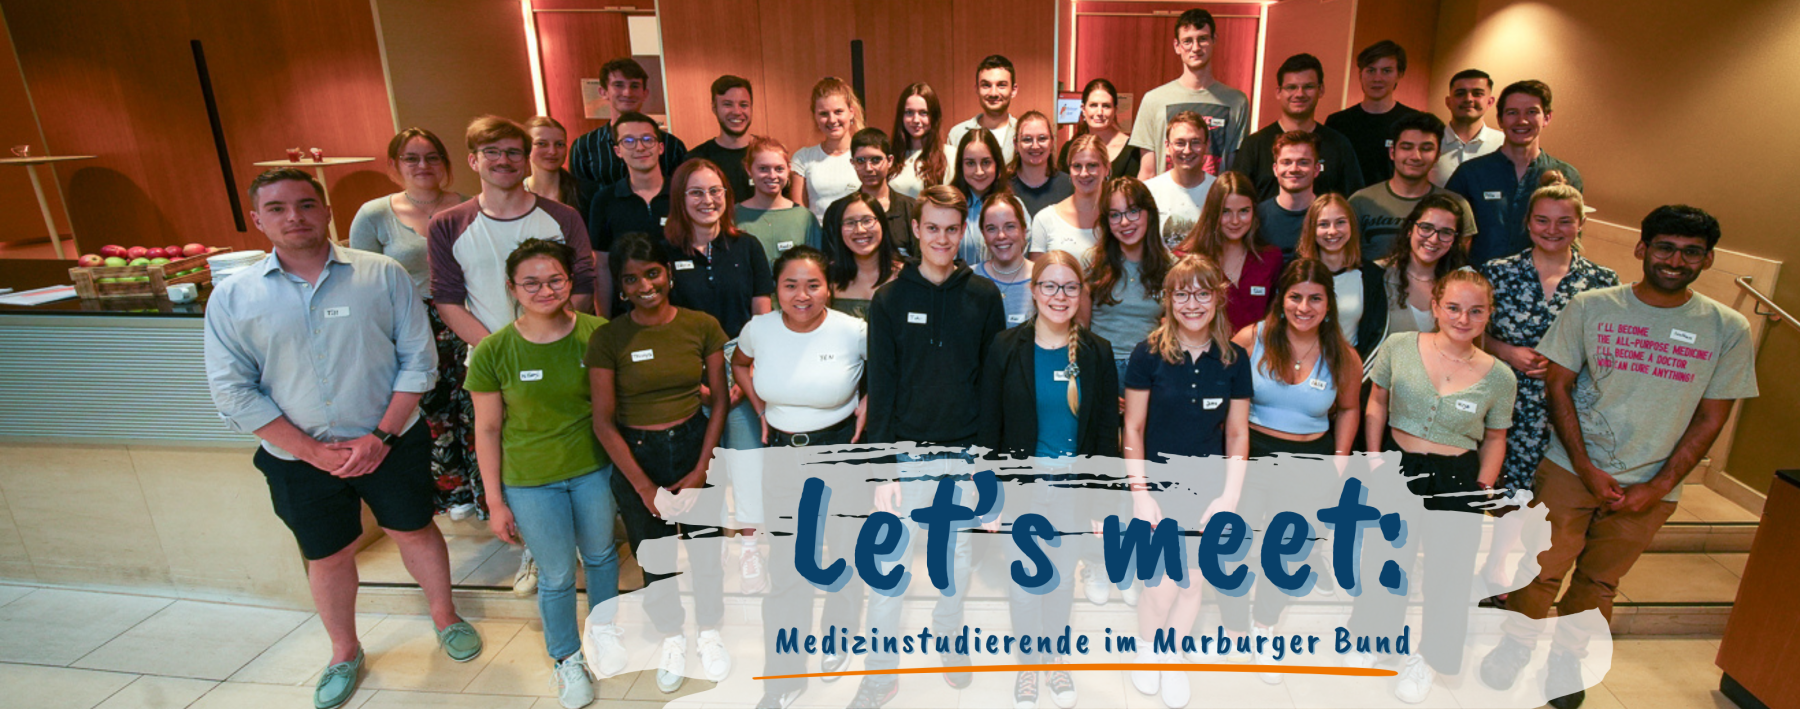 Let's meet - Studis im Marburger Bund